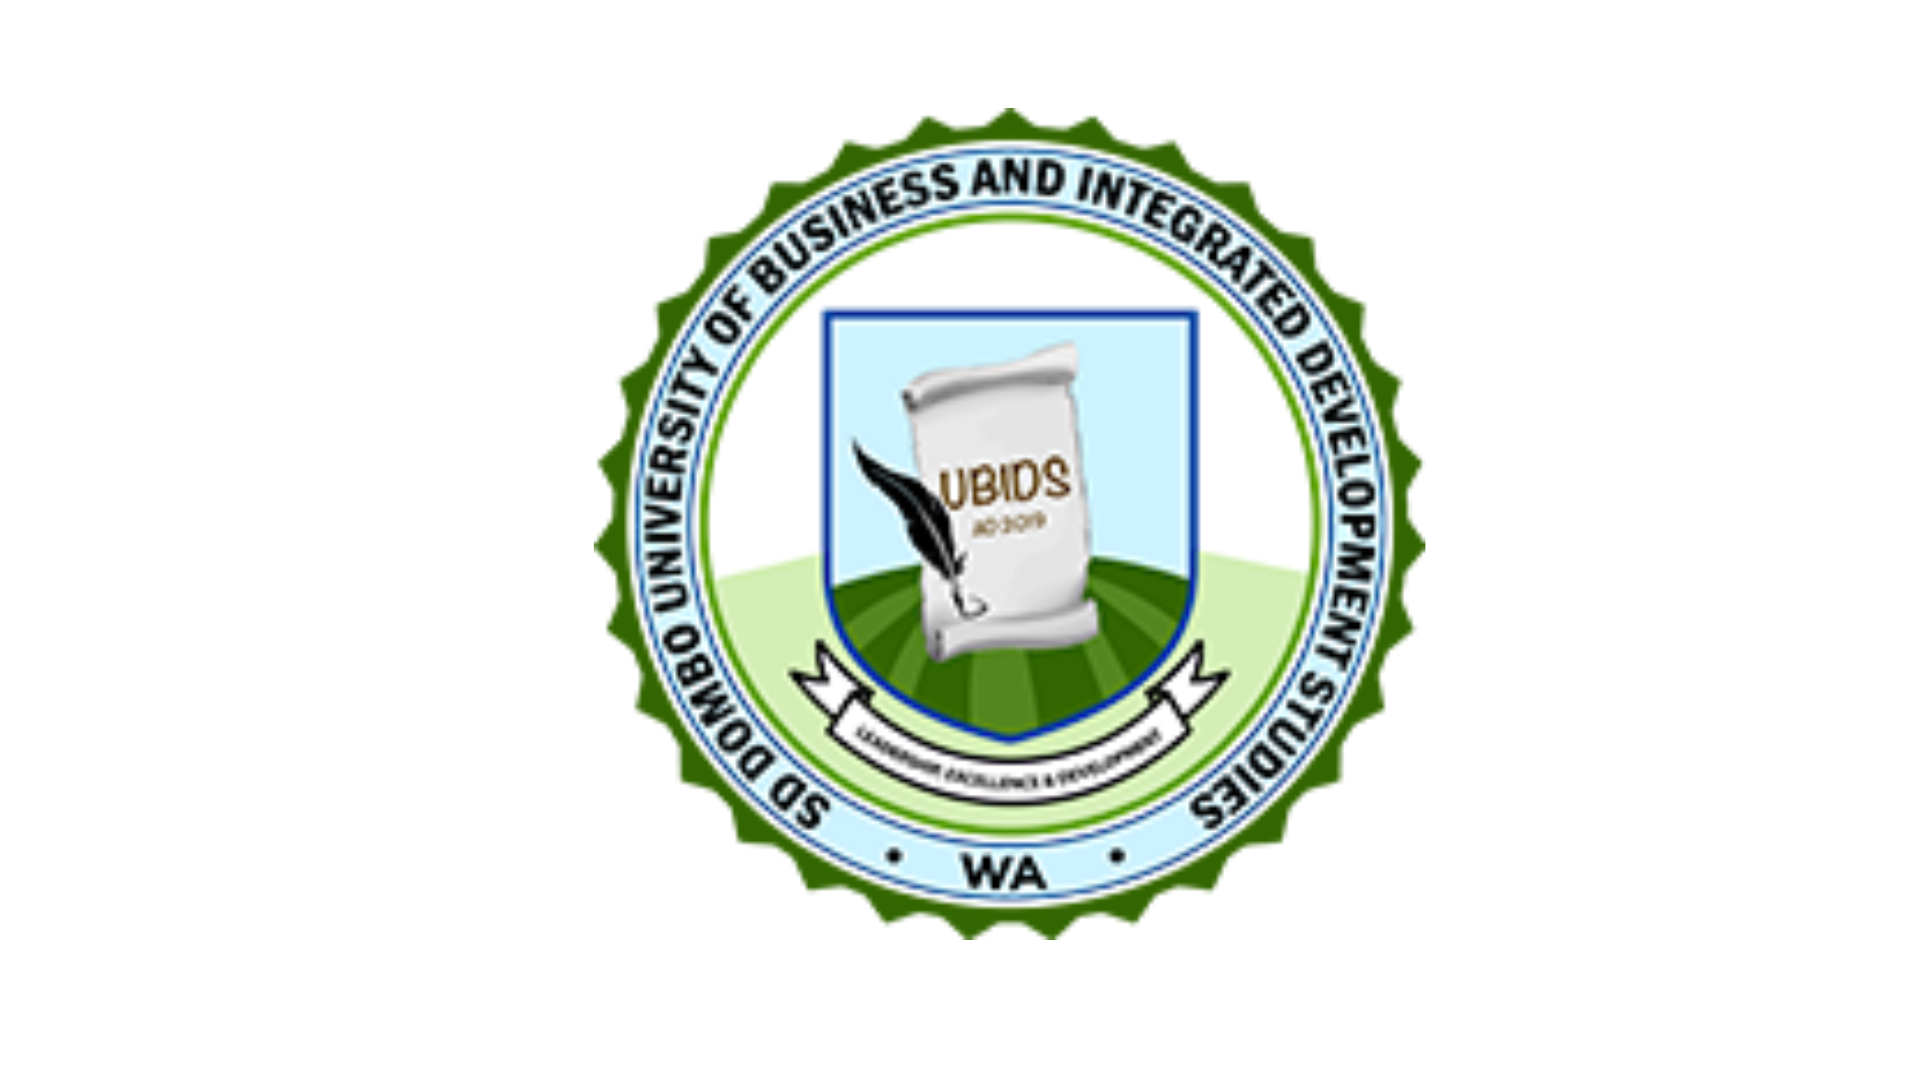 UBIDS students portal: Registration, login, course admission list